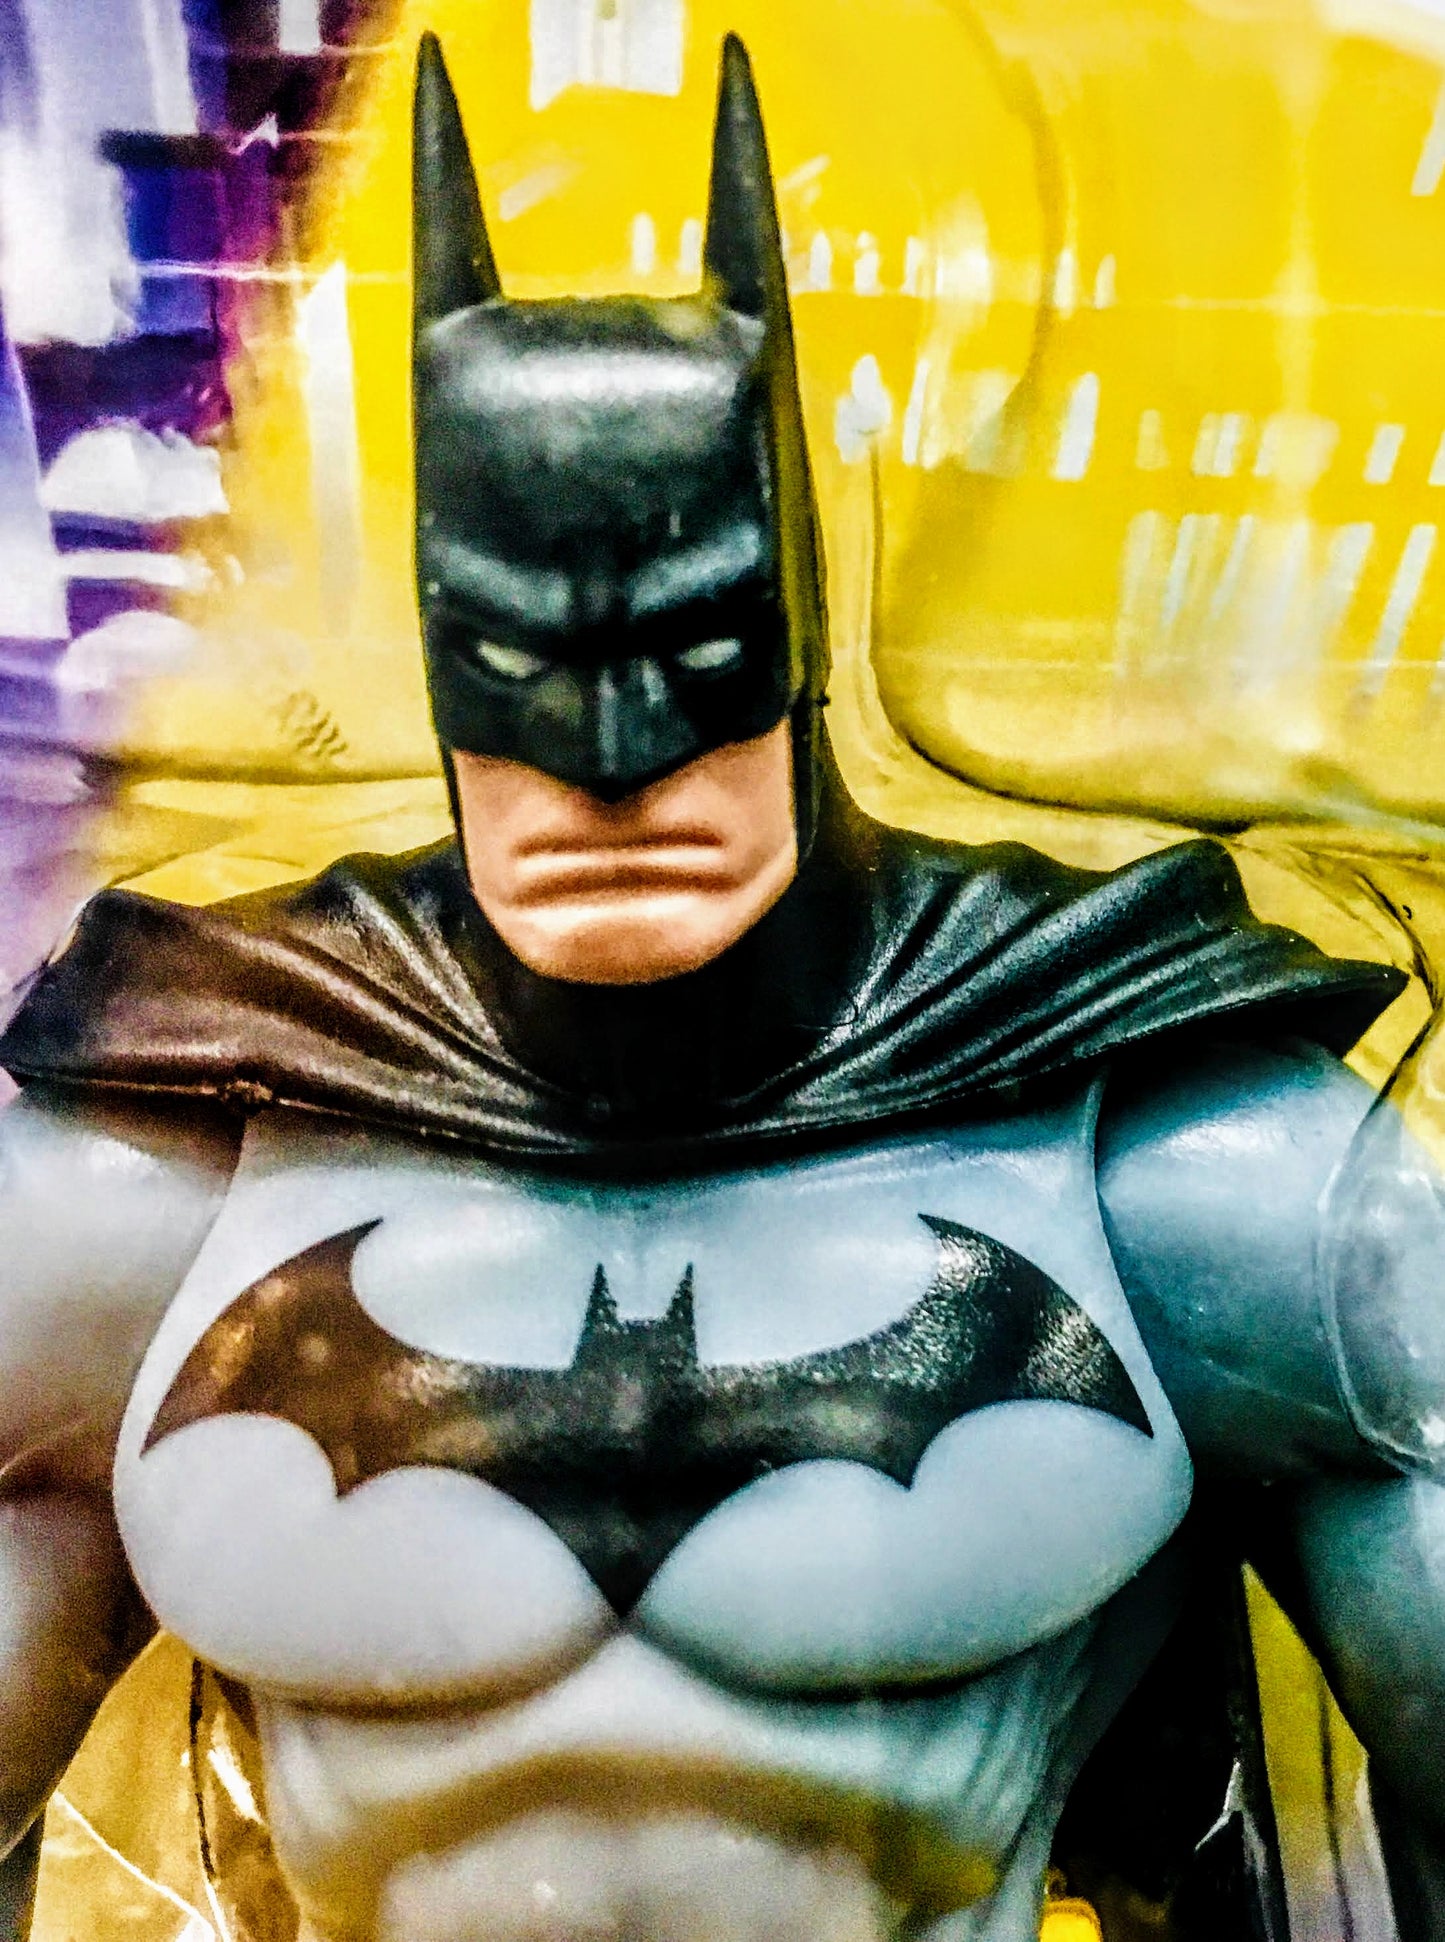 Zipline Batman